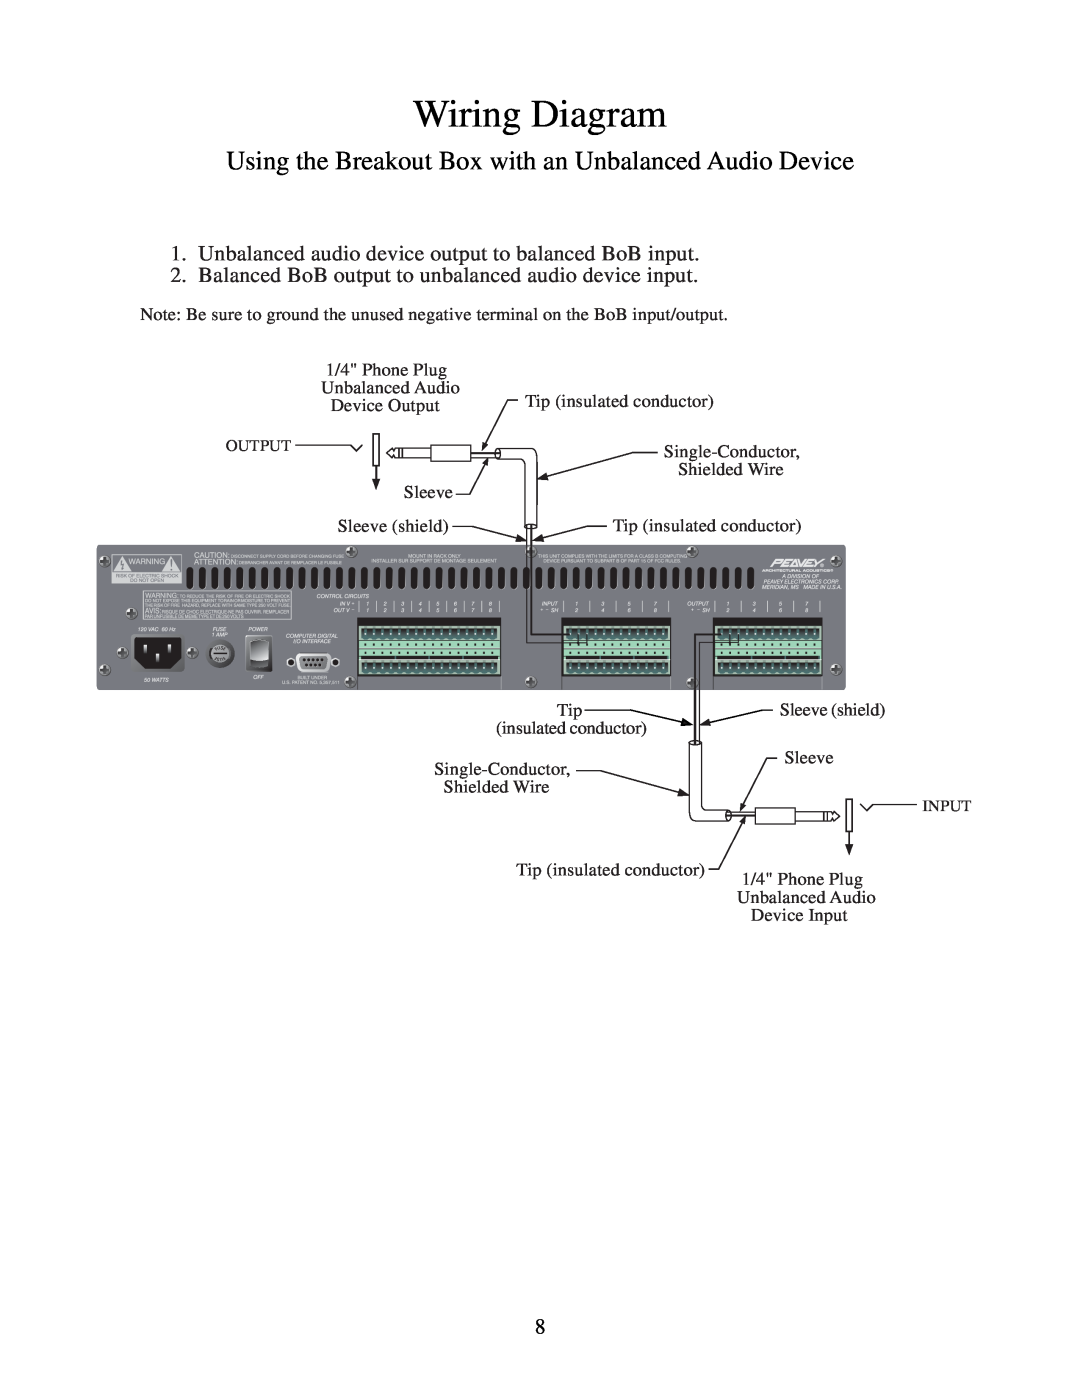 Peavey 646-049 manual Wiring Diagram, Unbalanced audio device output to balanced BoB input 